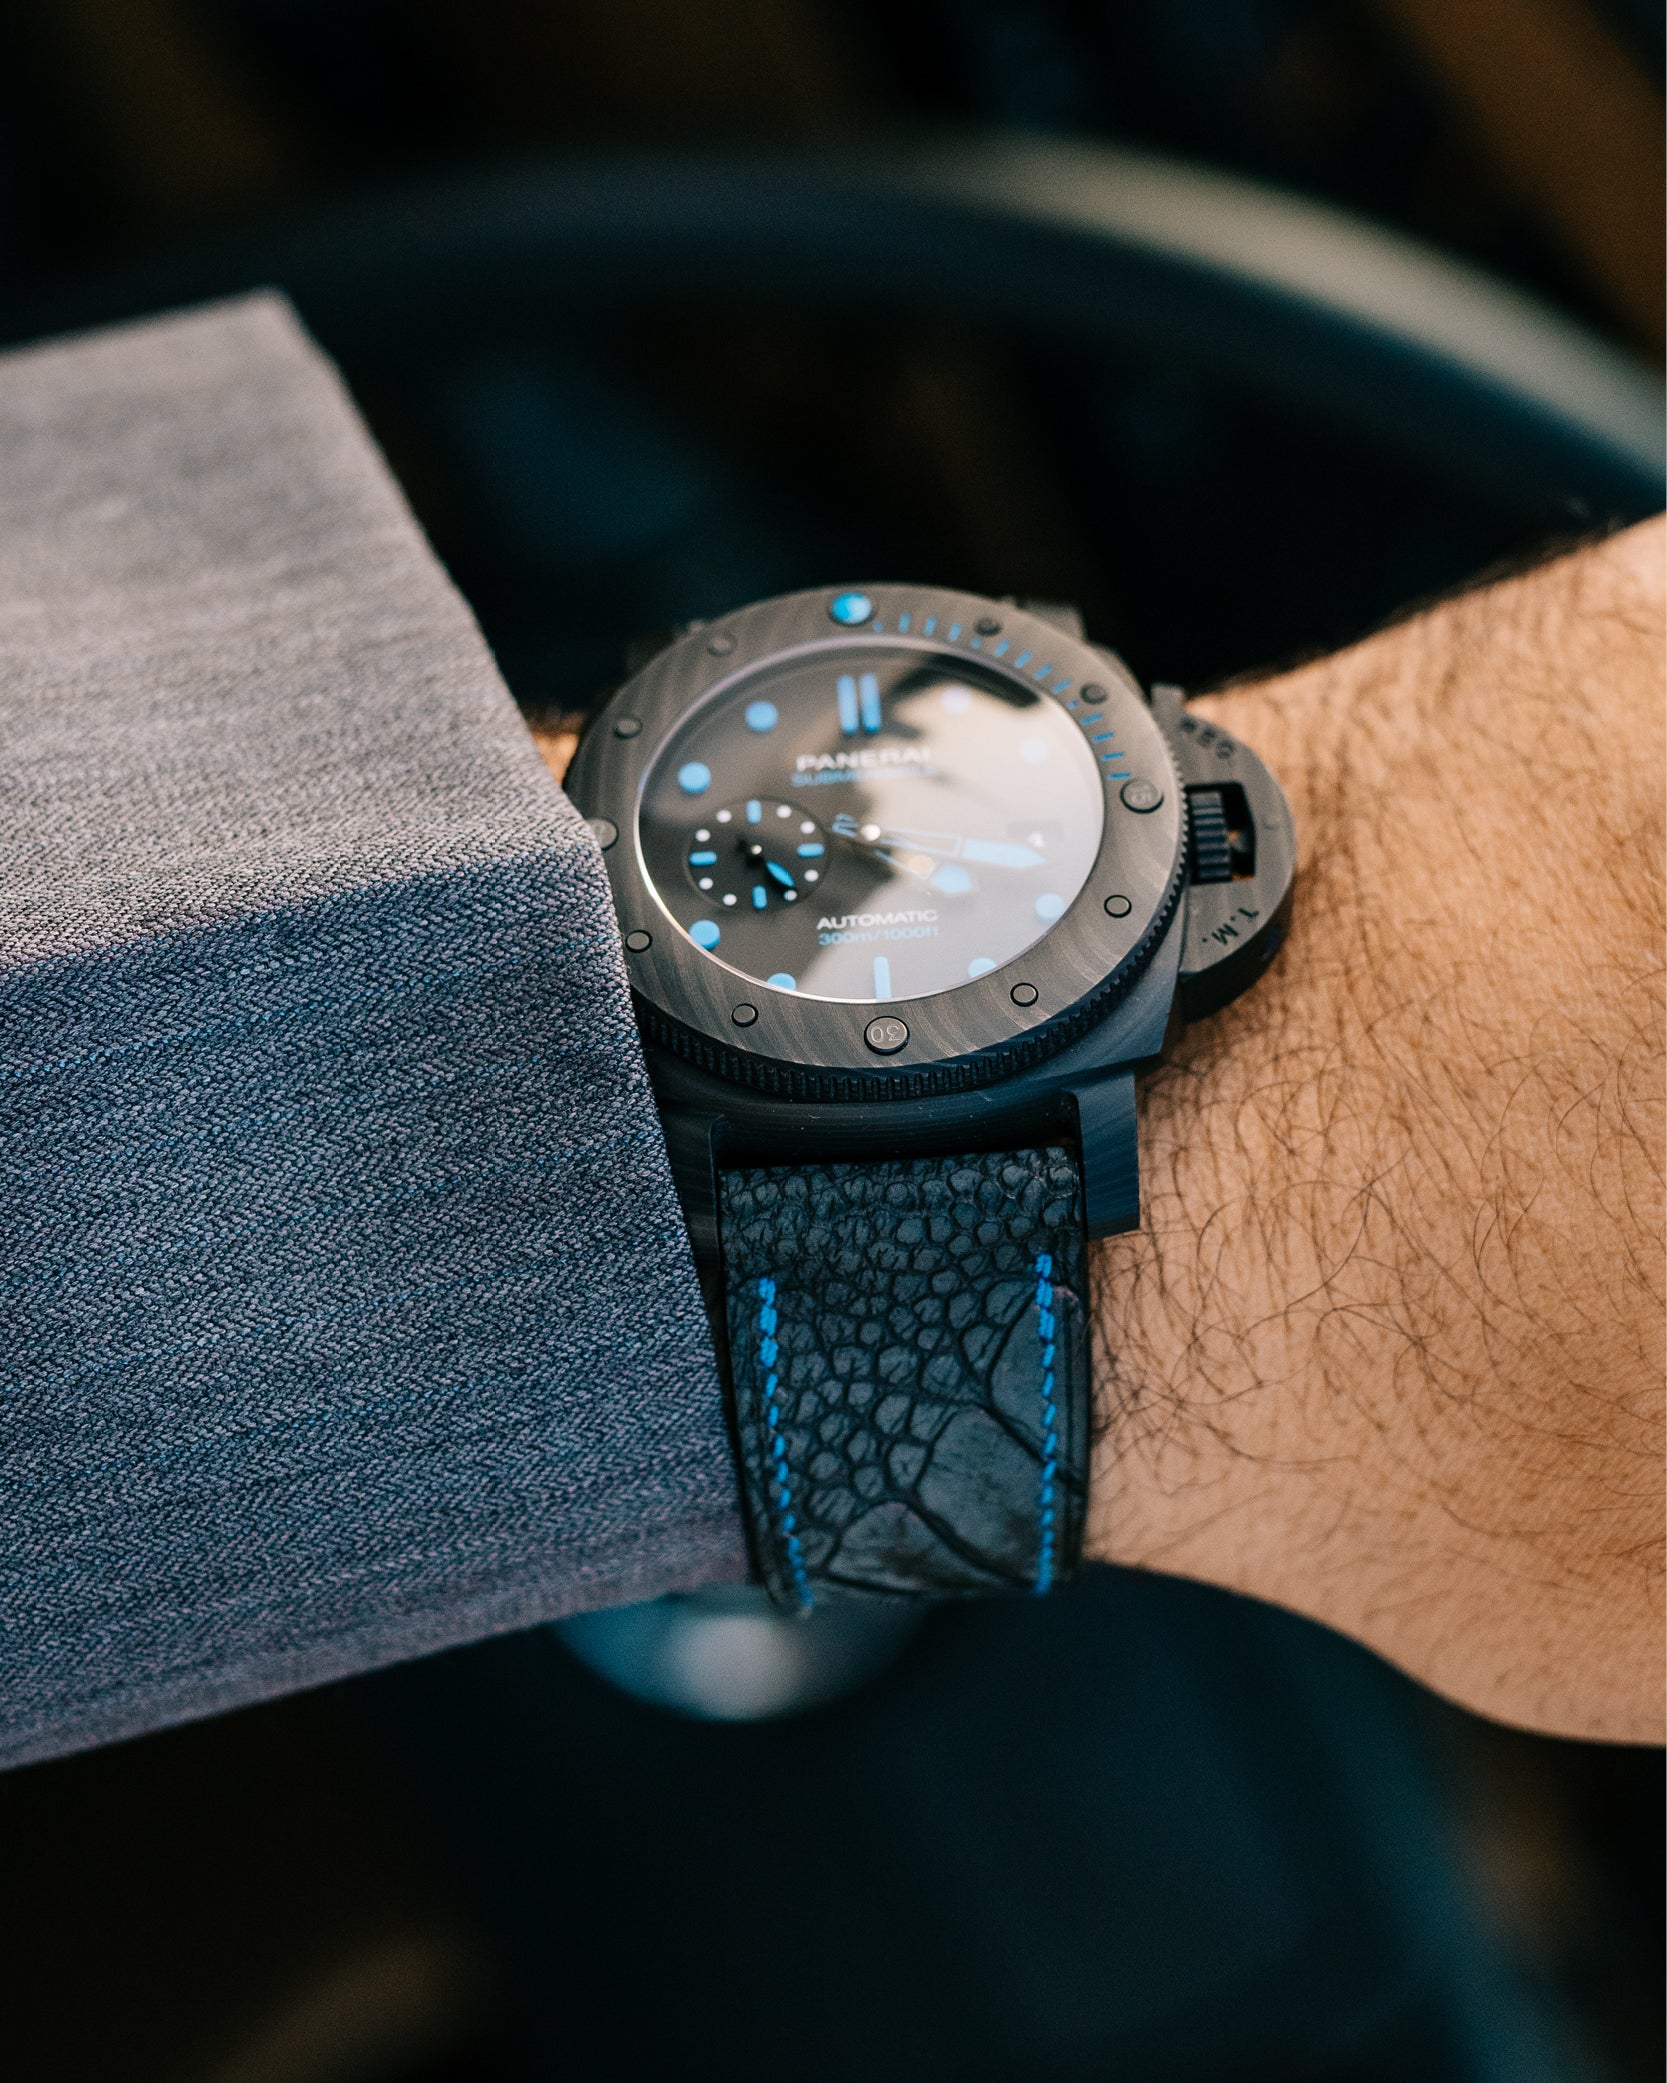 Close up of Black Alligator Panerai Watch Strap with Blue Stitching and Panerai Watch